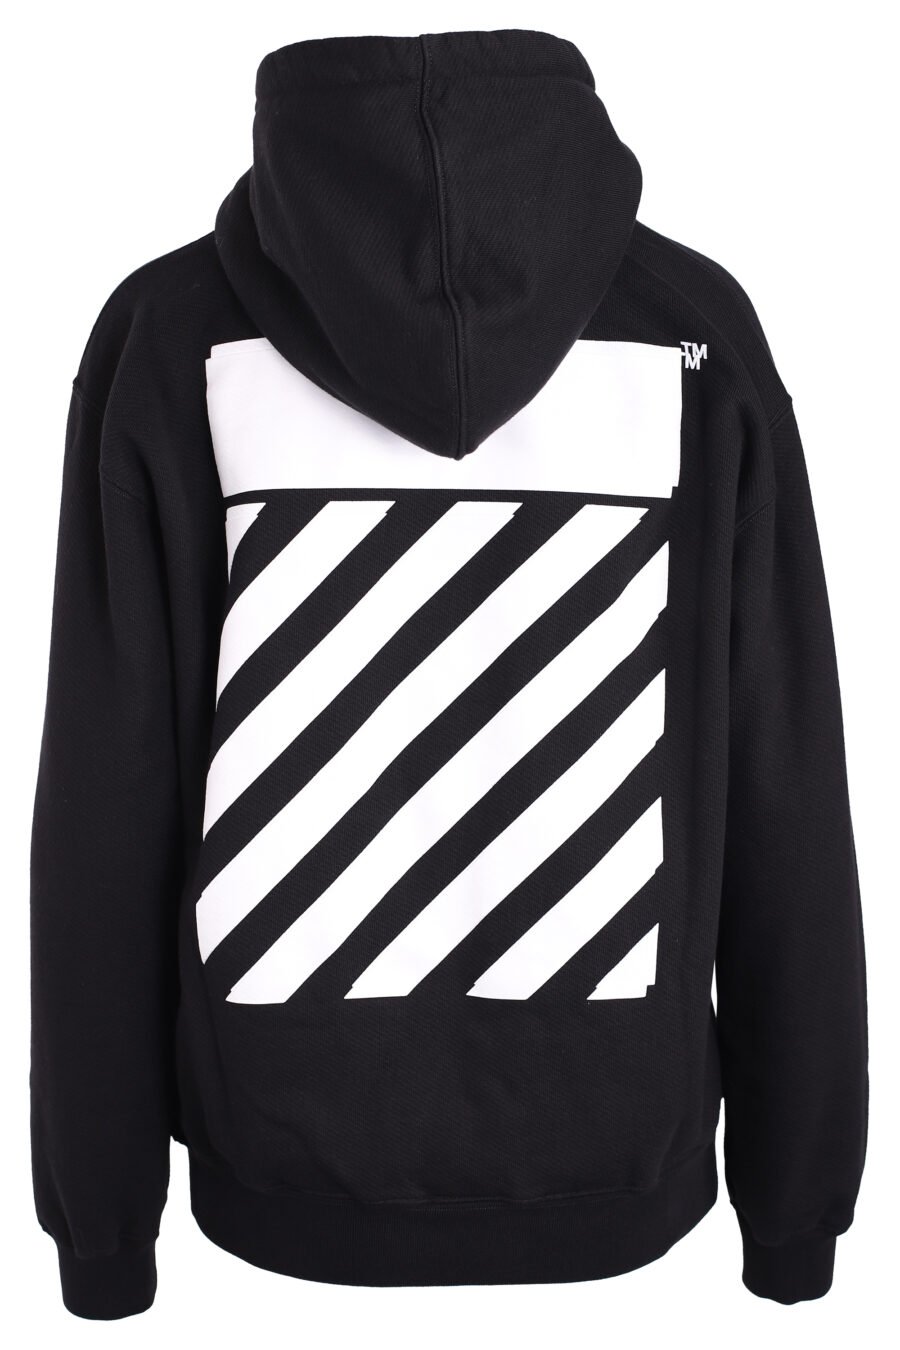 Black sweatshirt with white "Diagonal" logo hood - IMG 3400